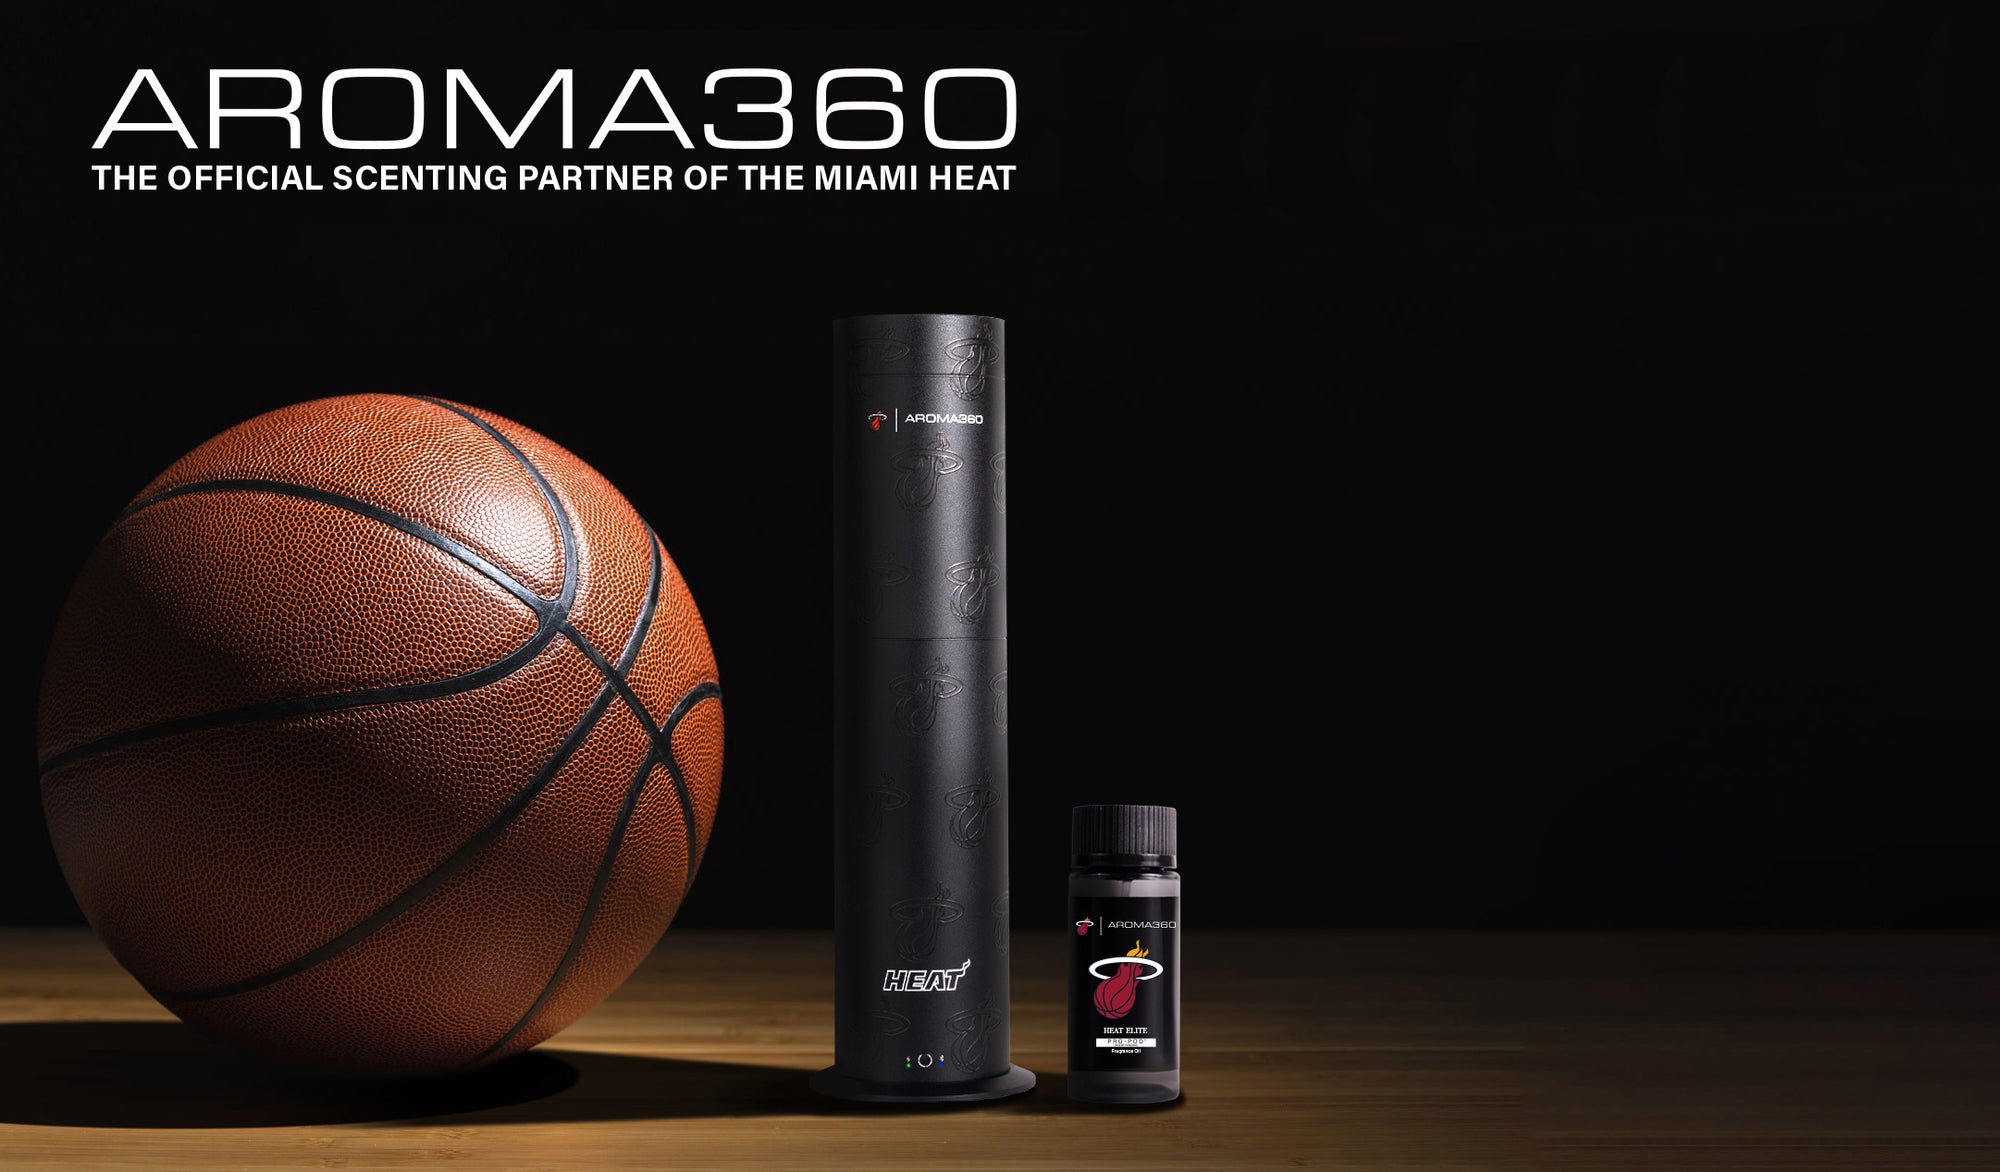 Aroma360 scorer stort med Miami Heat-partnerskap